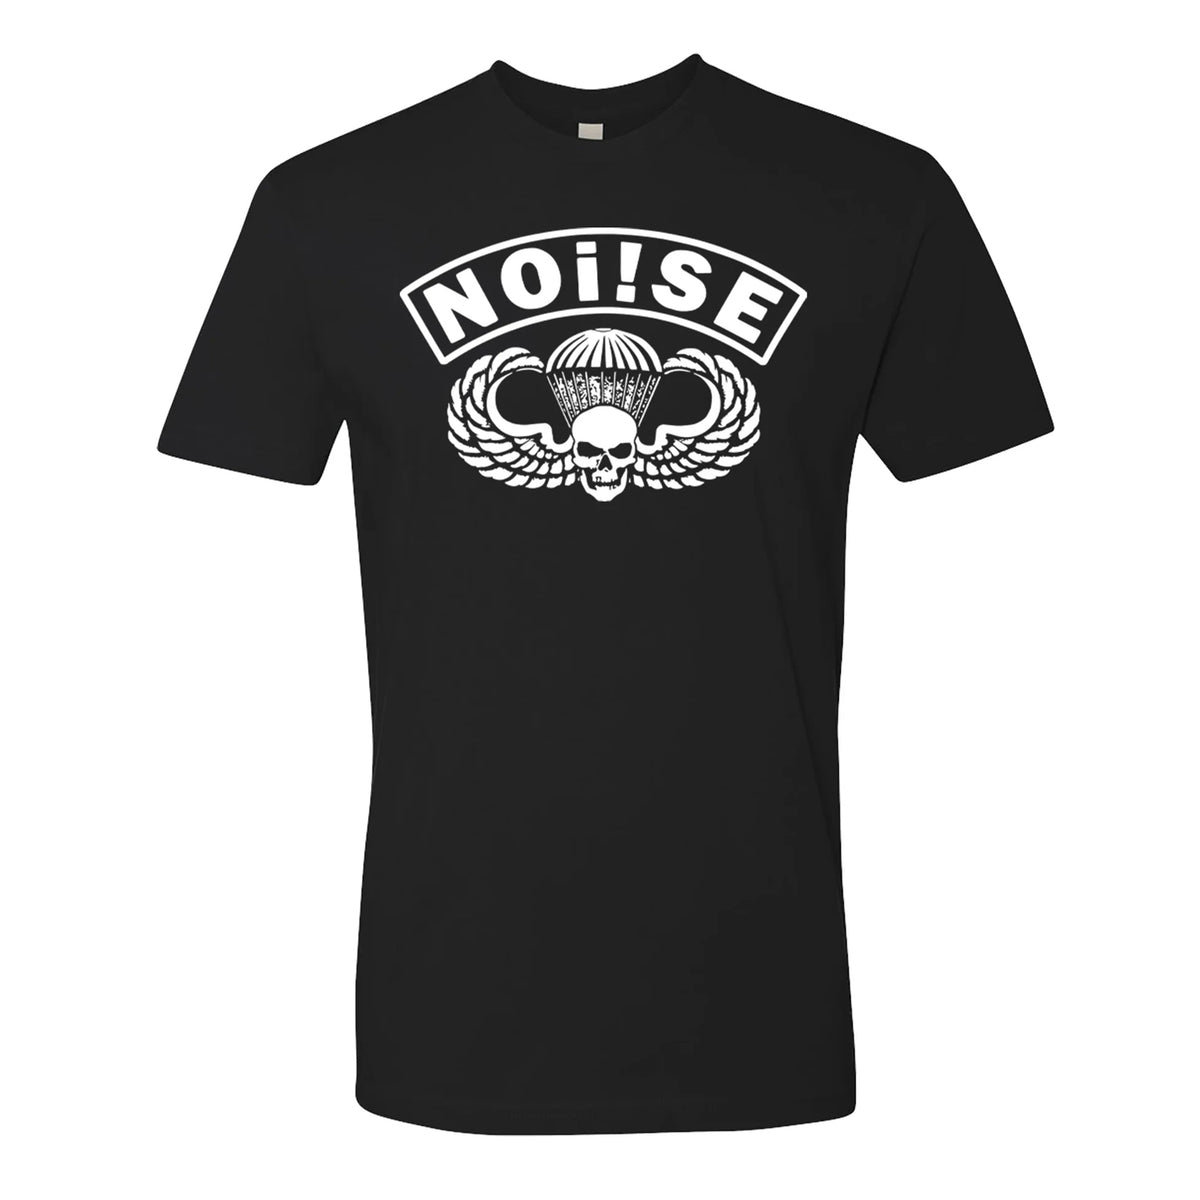 NOi!SE - Parachute Logo - White on Black - T-Shirt